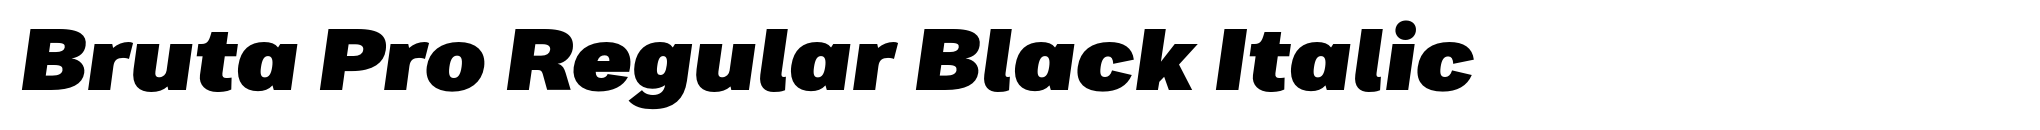 Bruta Pro Regular Black Italic image